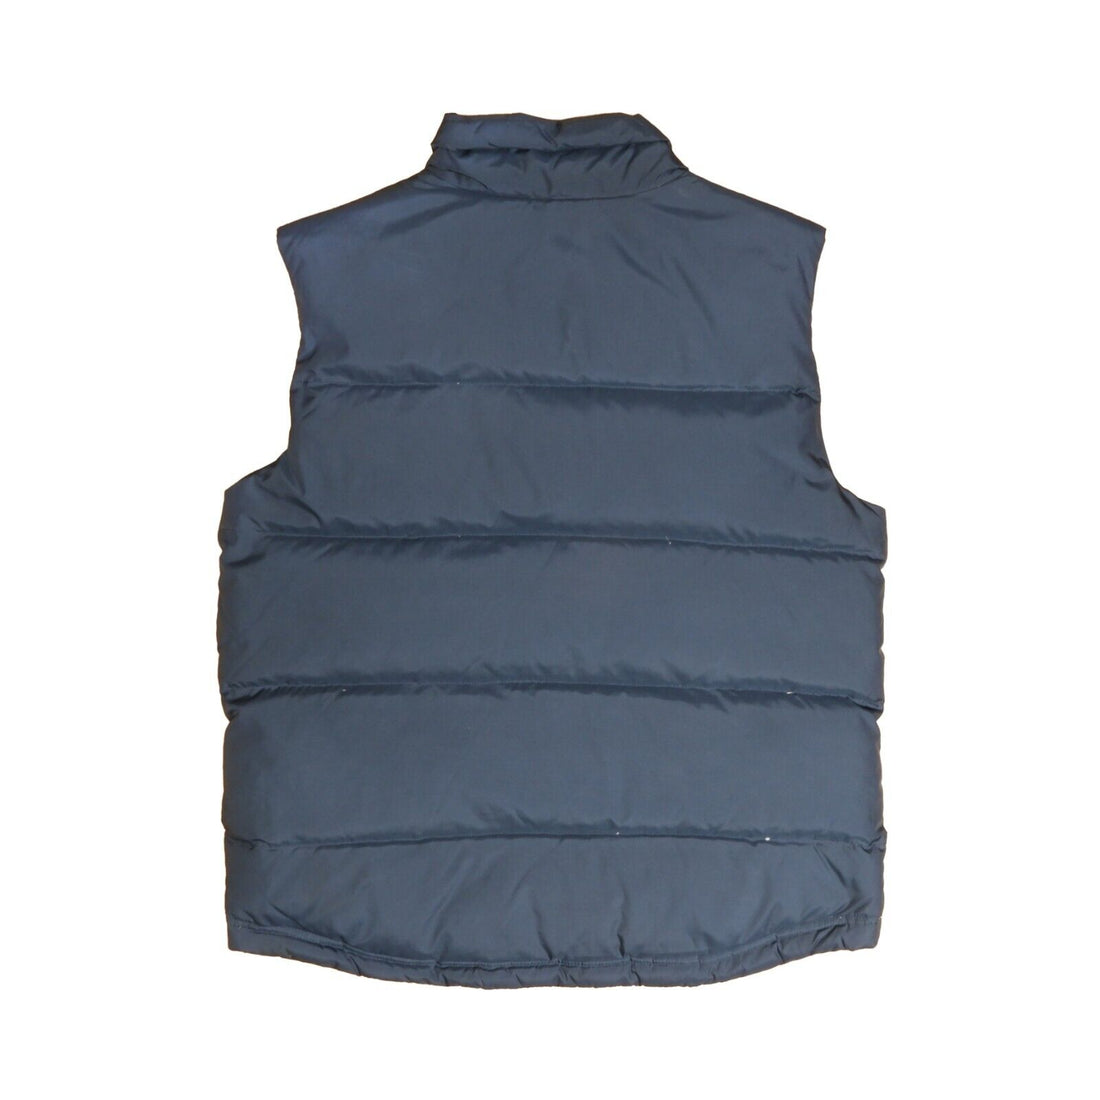 Vintage Tommy Hilfiger Puffer Vest Jacket Size Large Blue Down Insulated